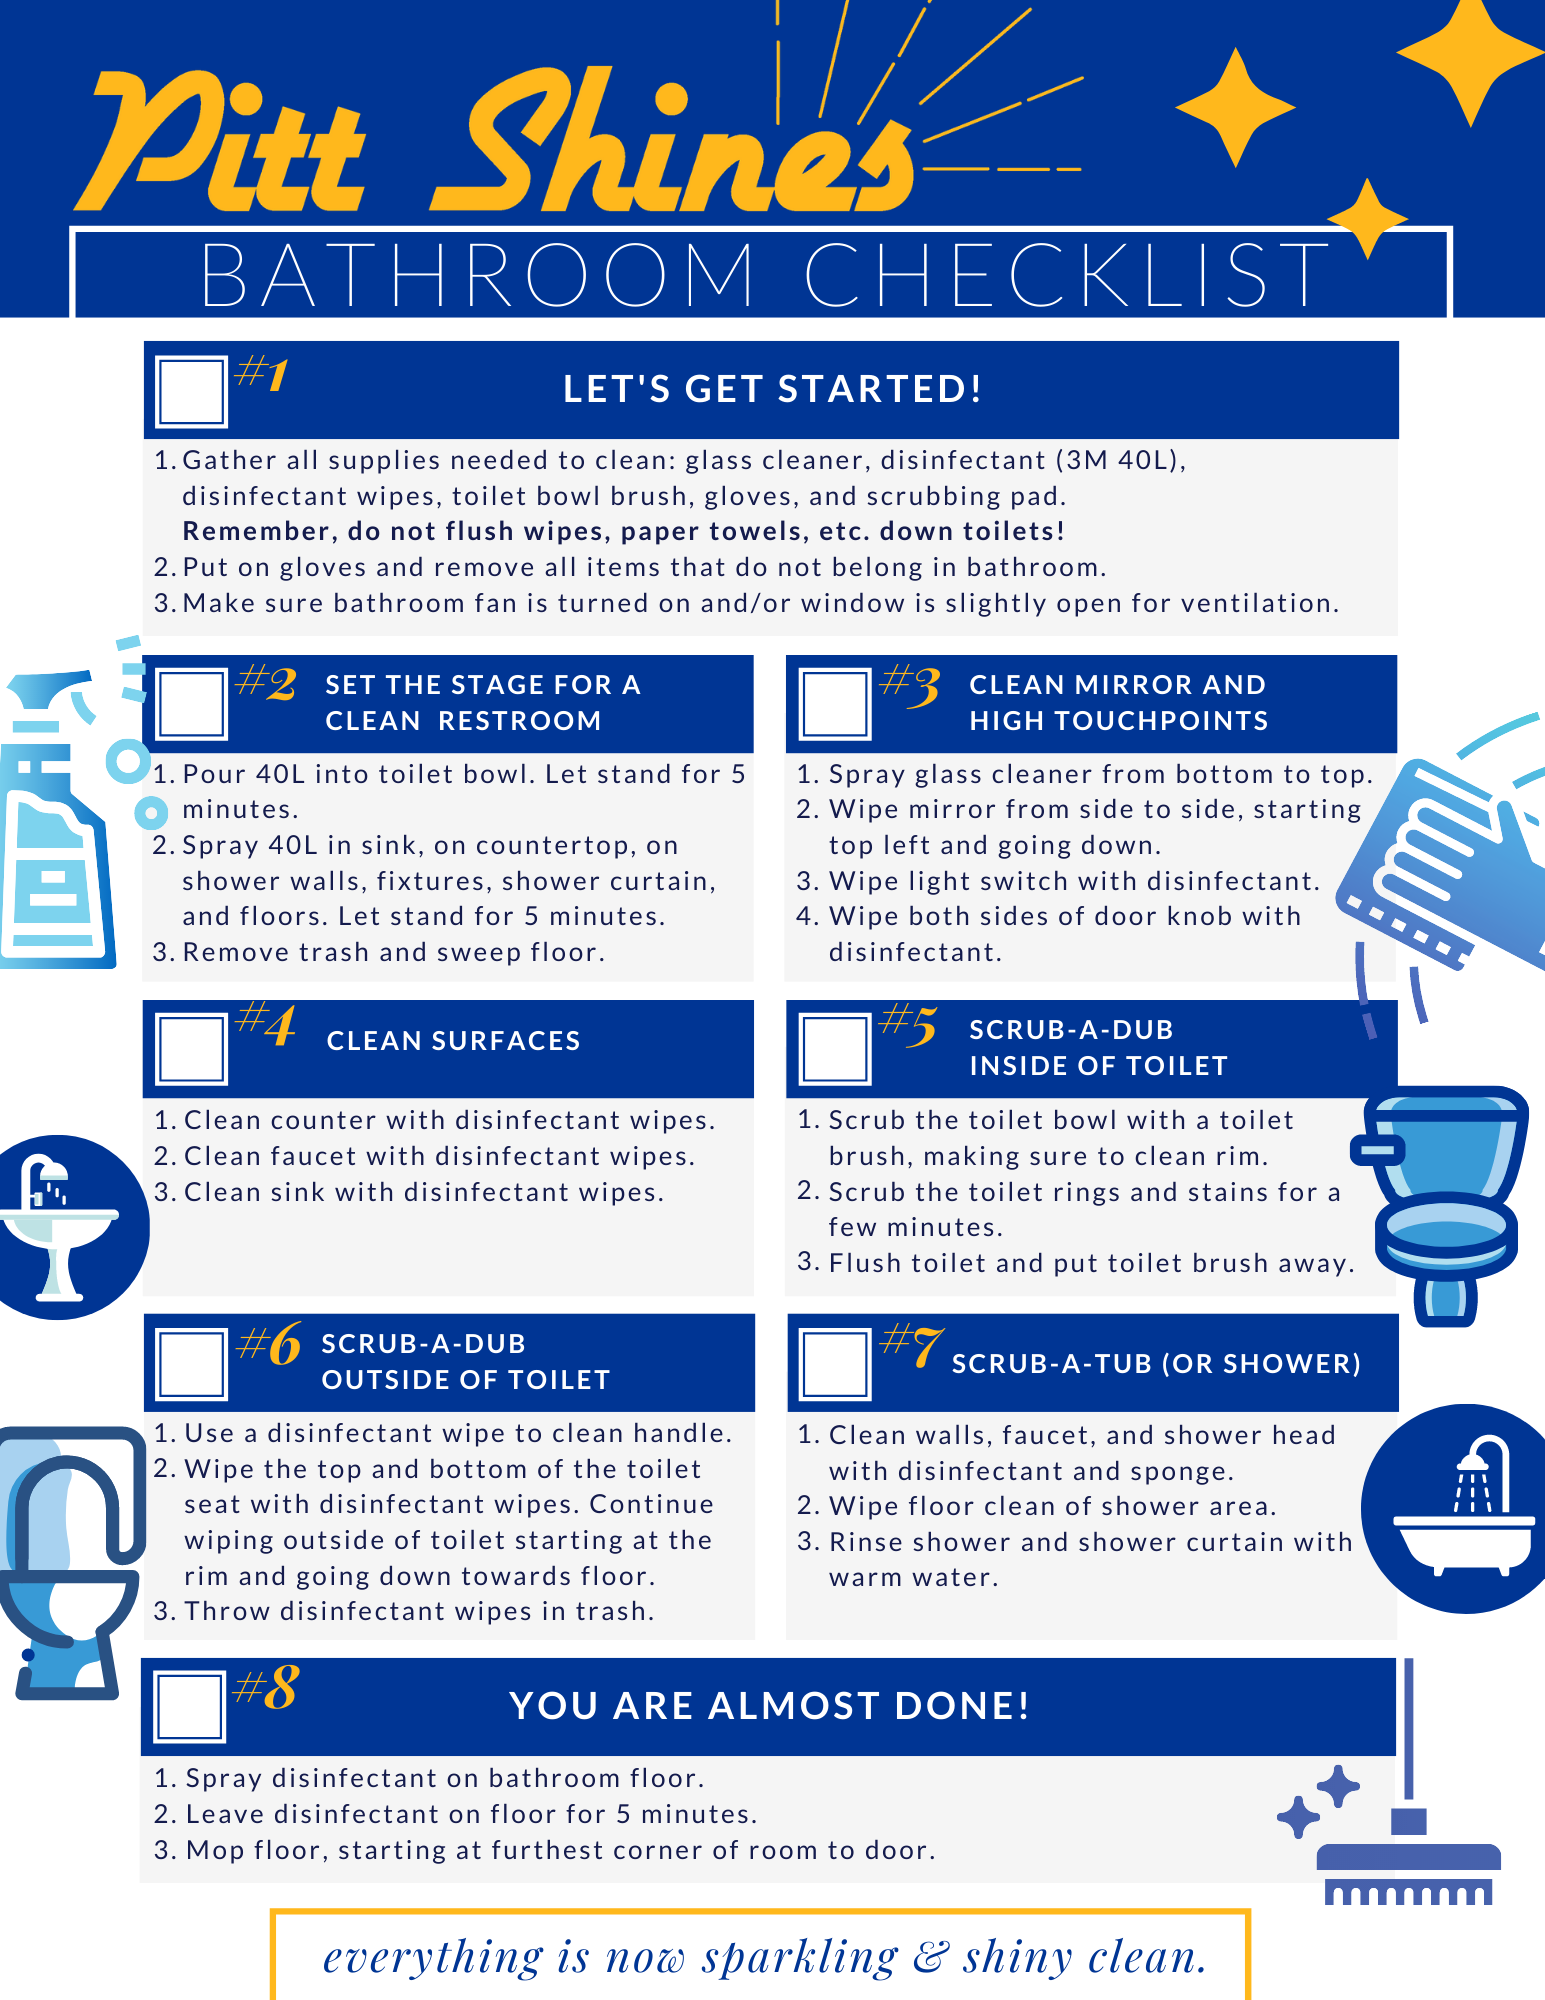 pitt shines bathroom cleaning checklist 